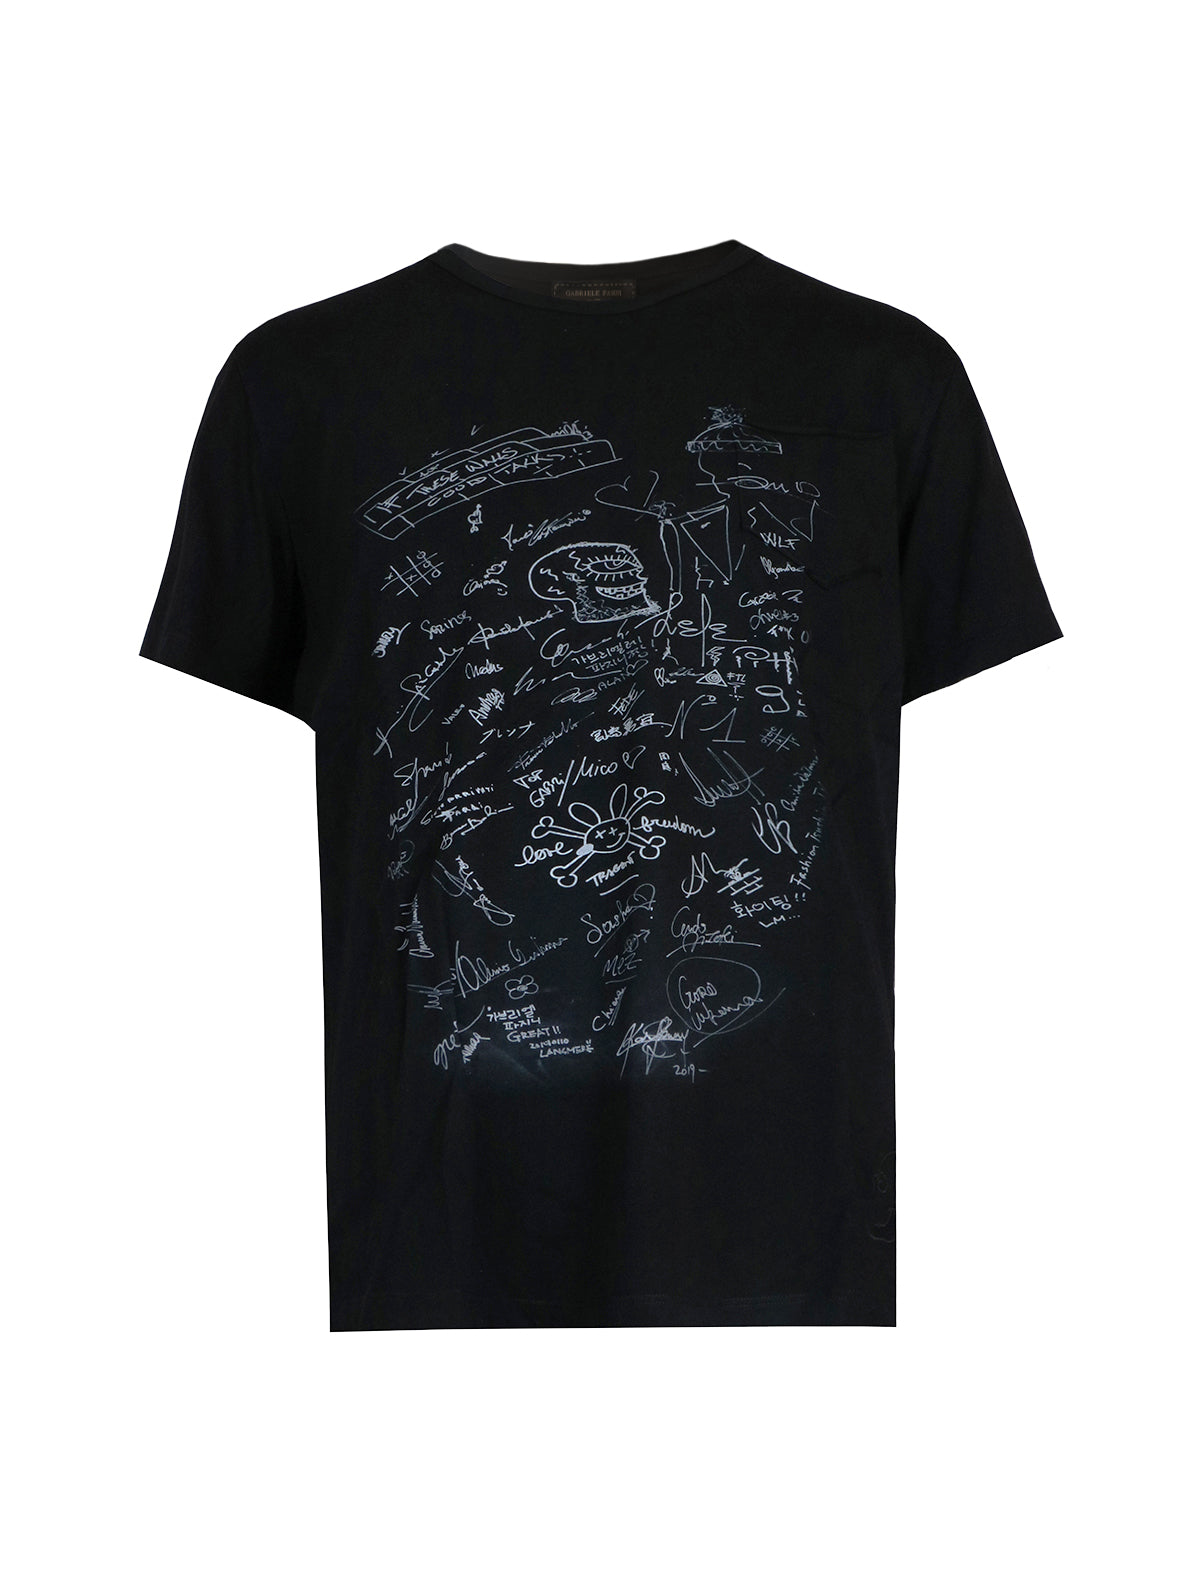 Gabriele Pasini Doodles T-Shirt in Black